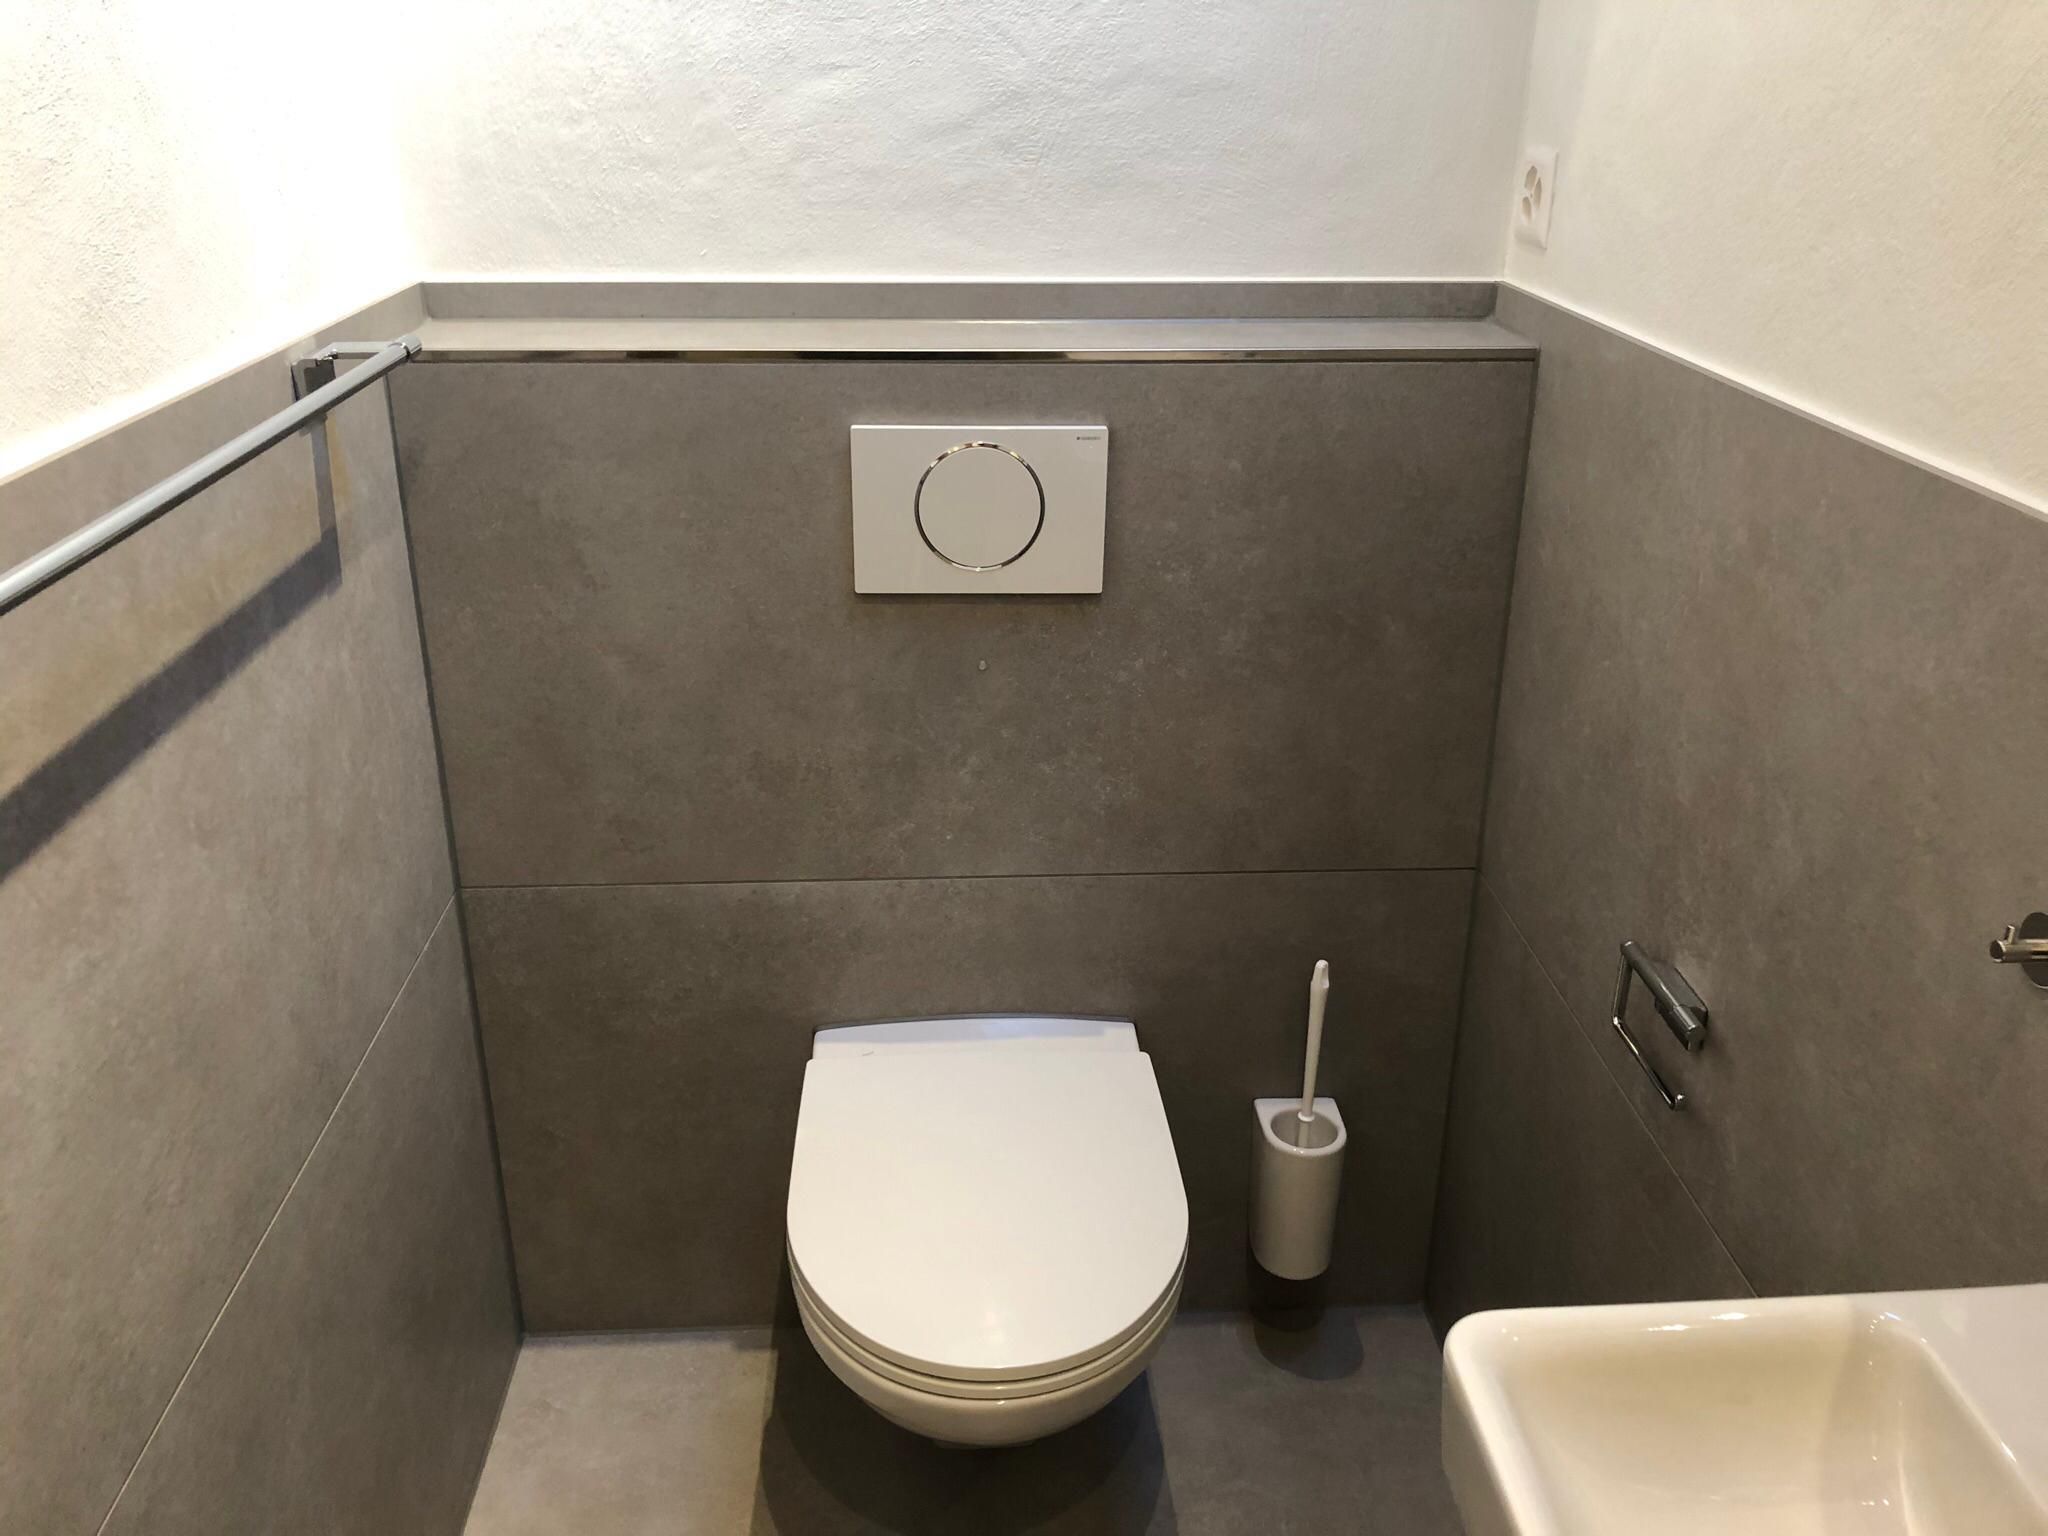 Toilette, WC, Badezimmer, Platten